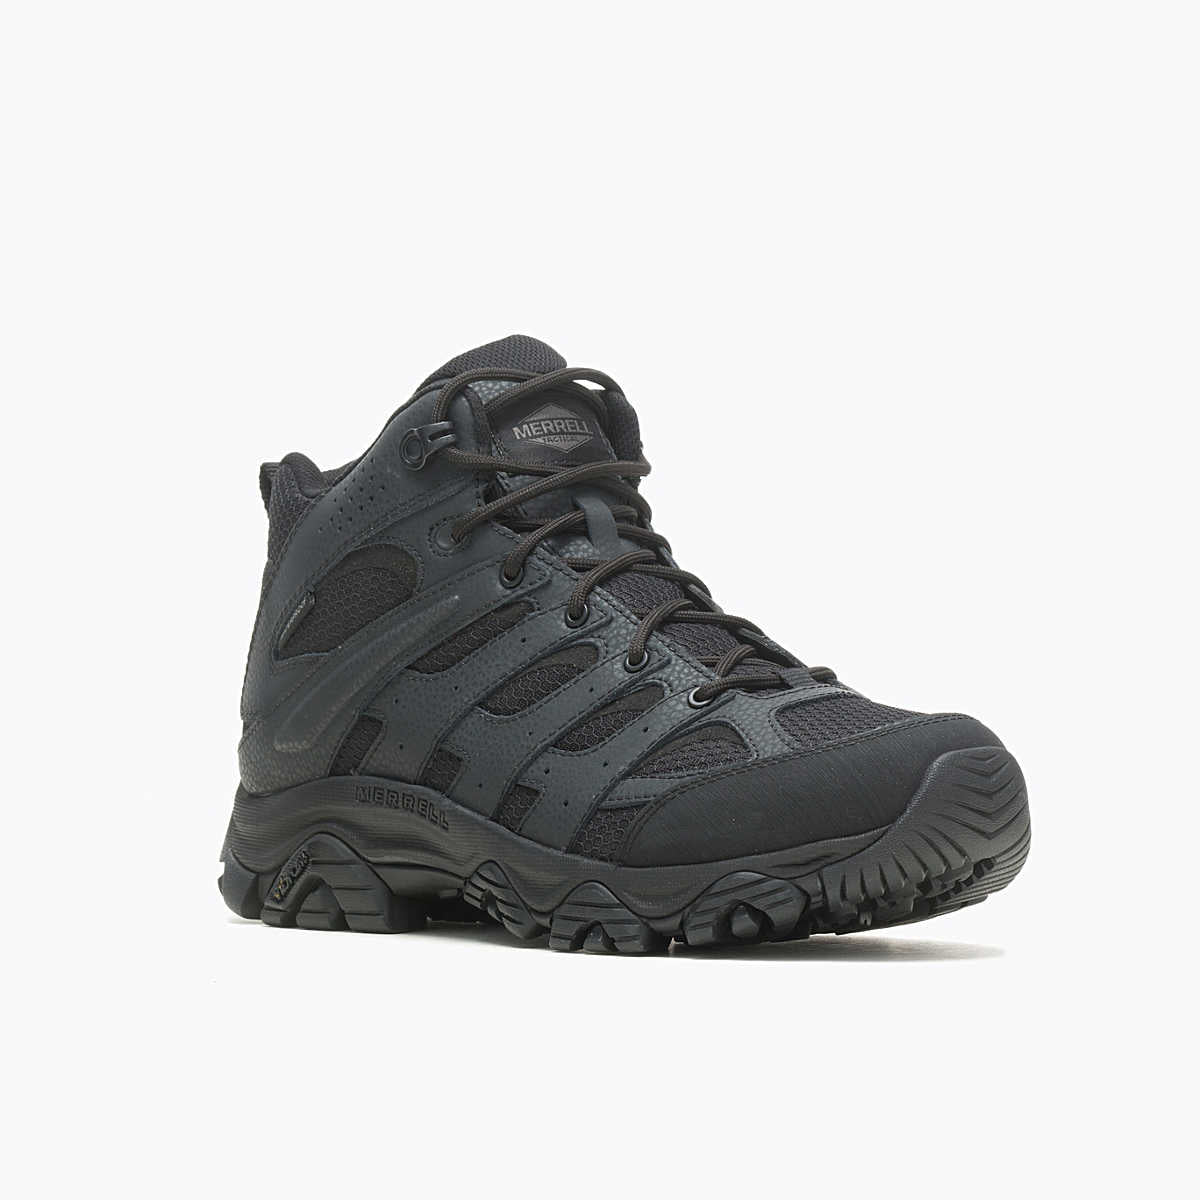 Merrell J003911 Mid Tactical Waterproof Men's Boots Black